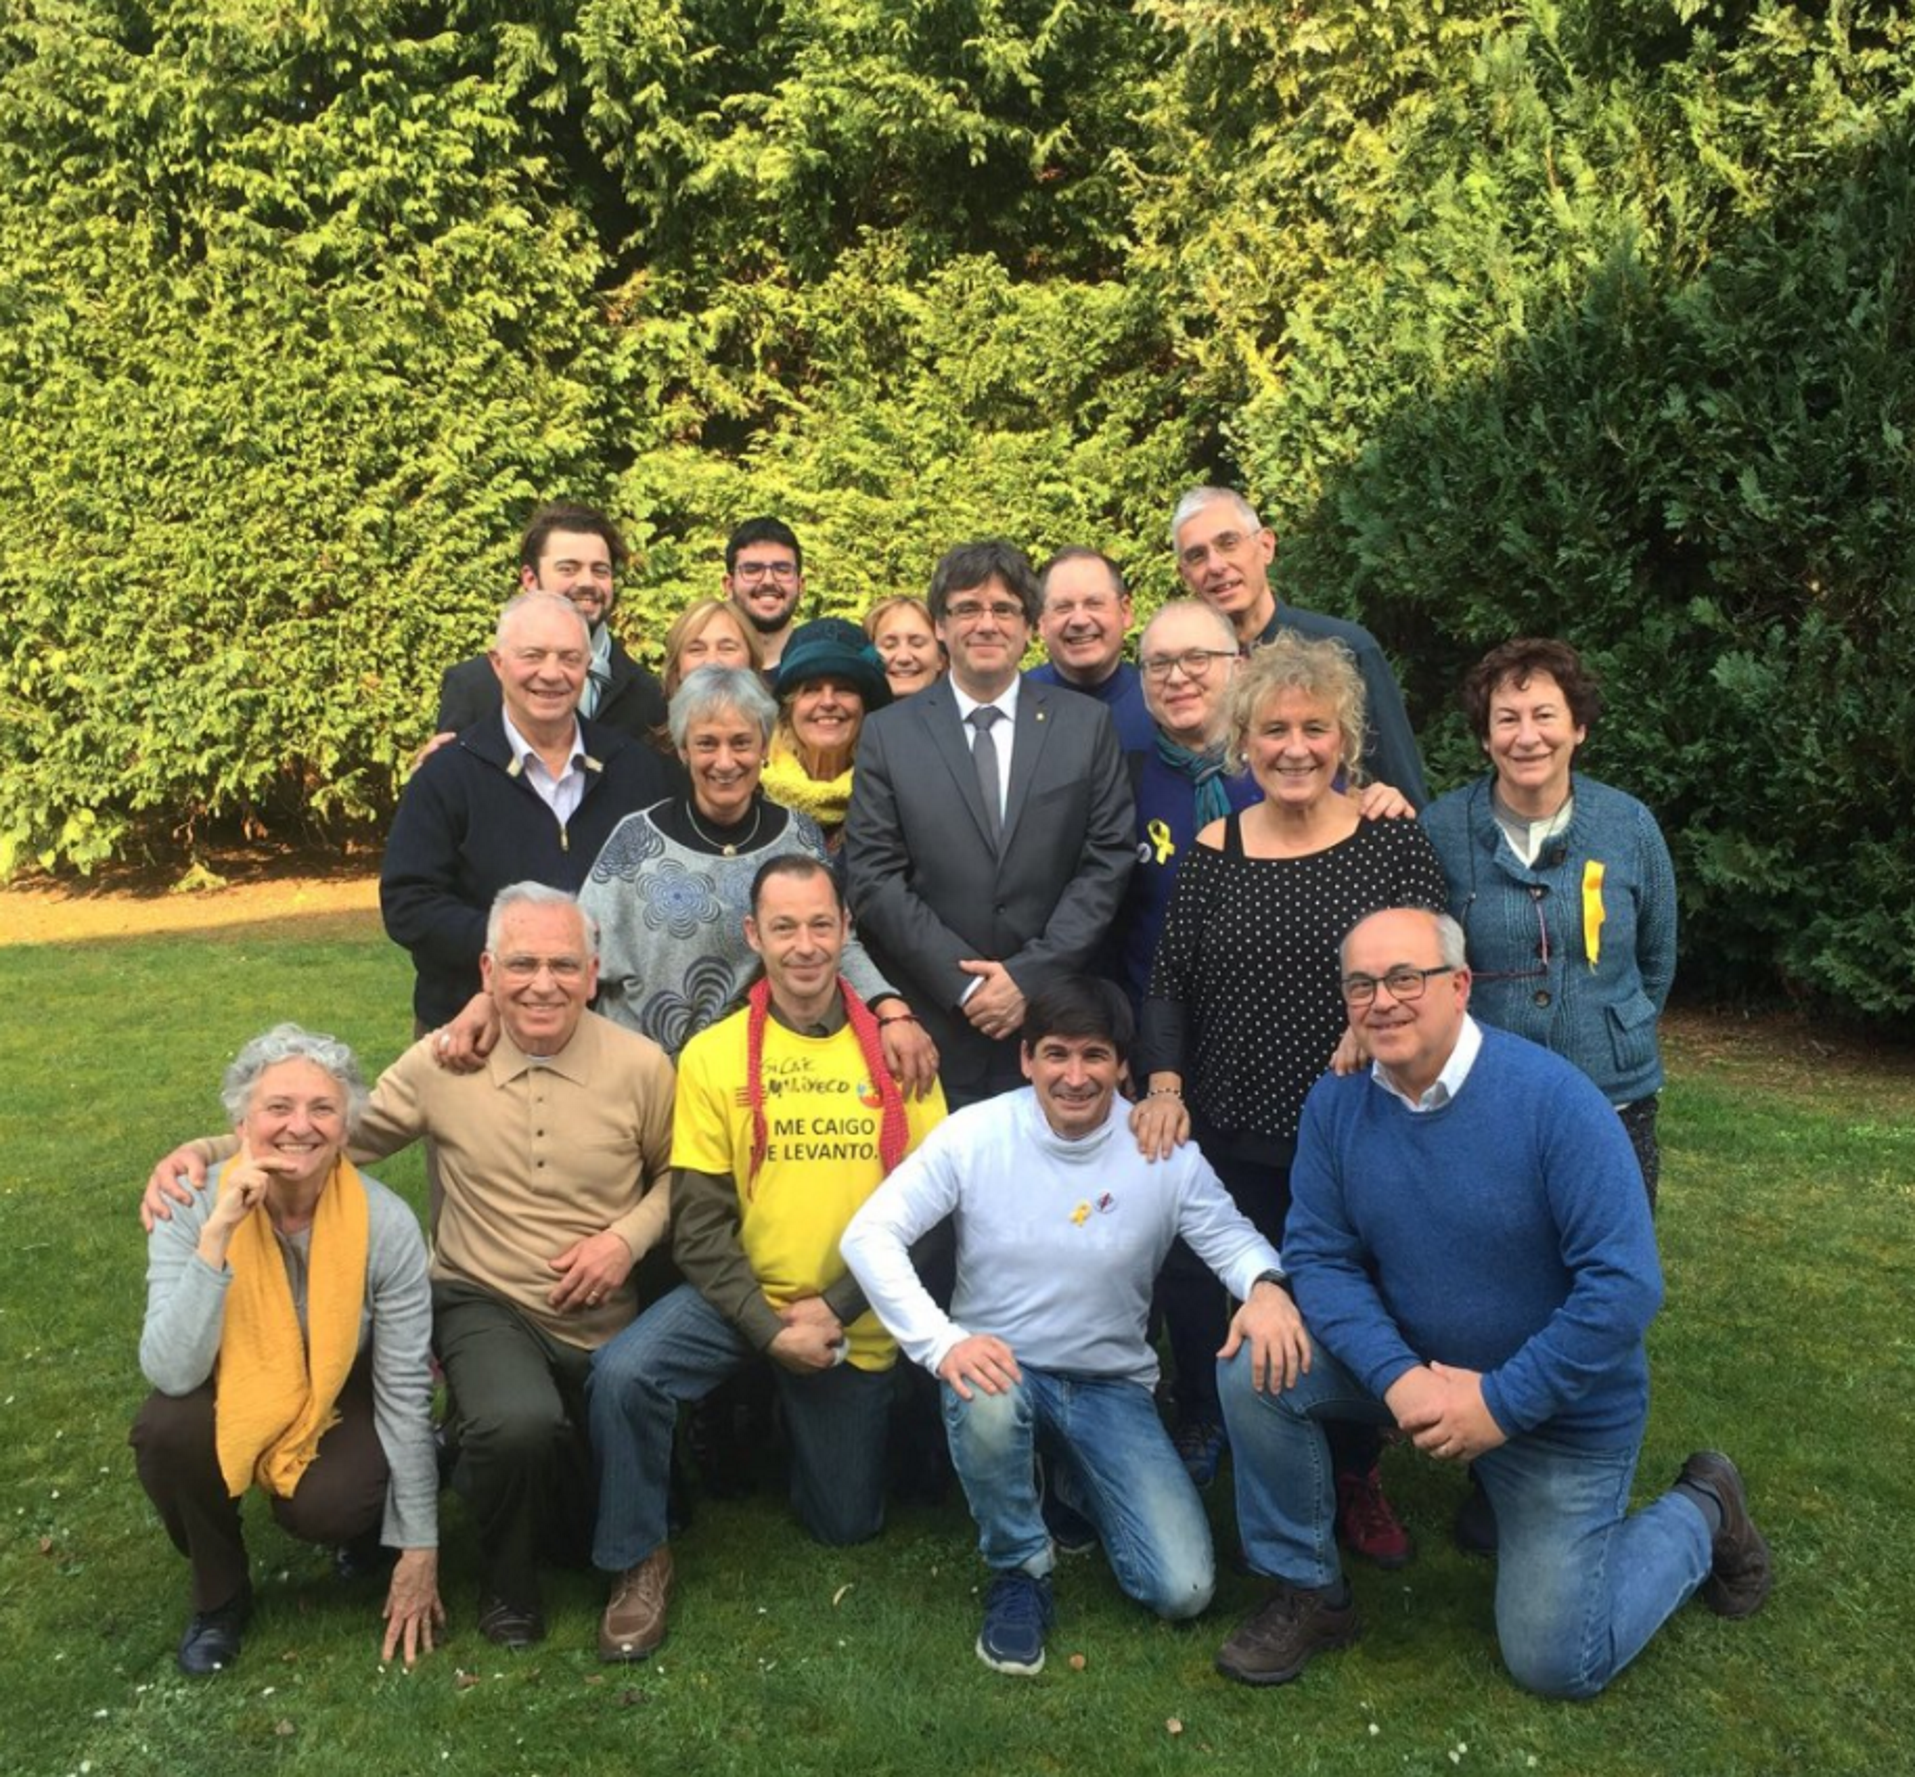 Súmate se reúne con Puigdemont en Bruselas